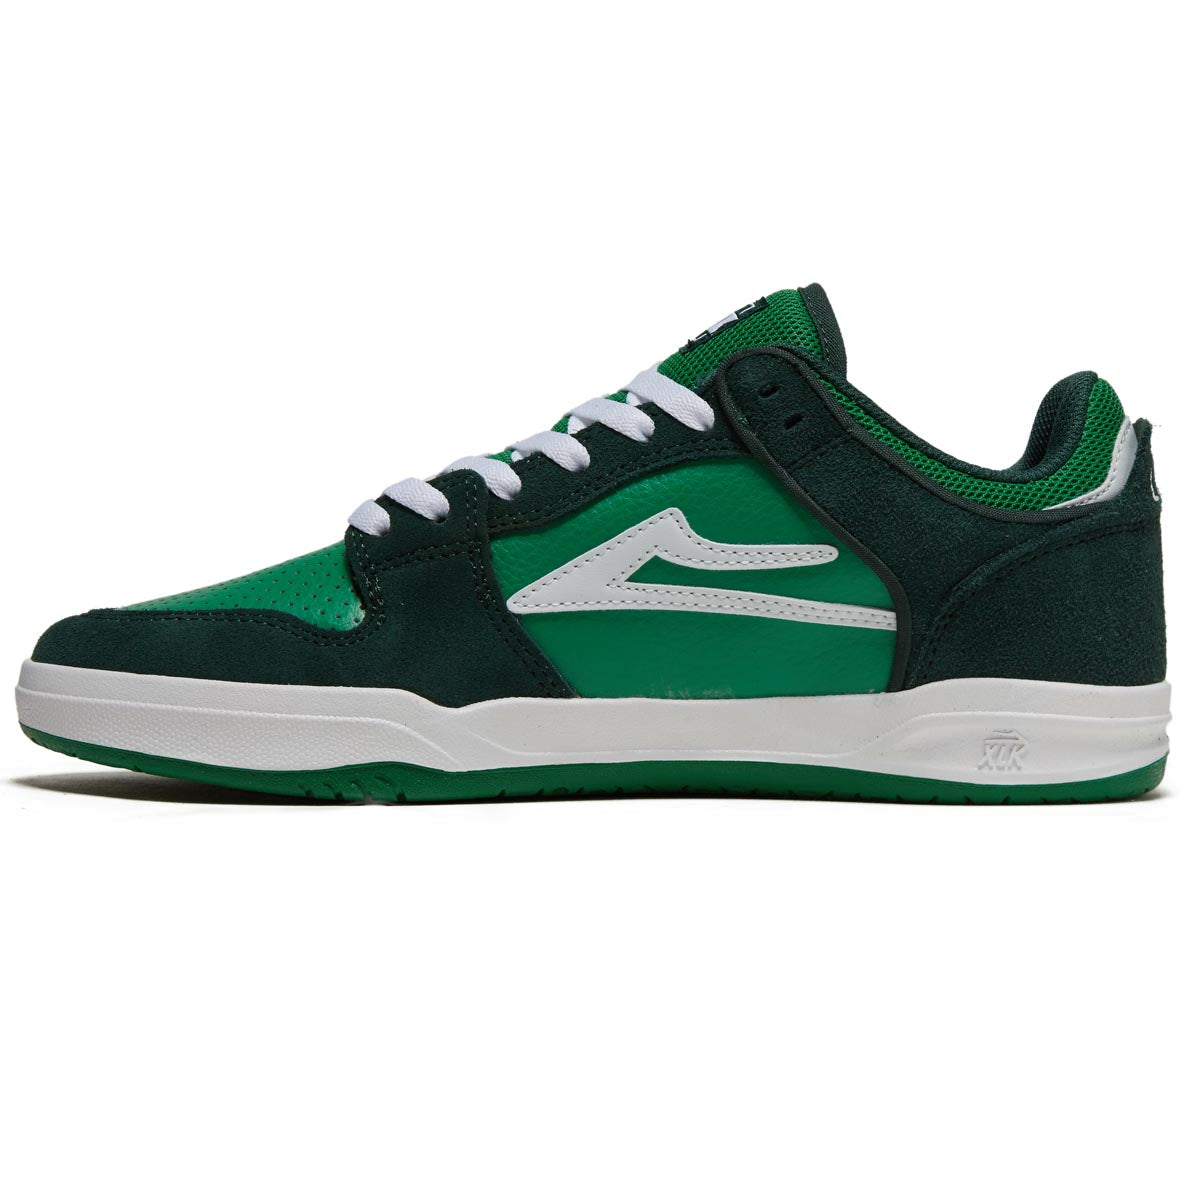 Lakai Telford Low Shoes - Green Suede image 2